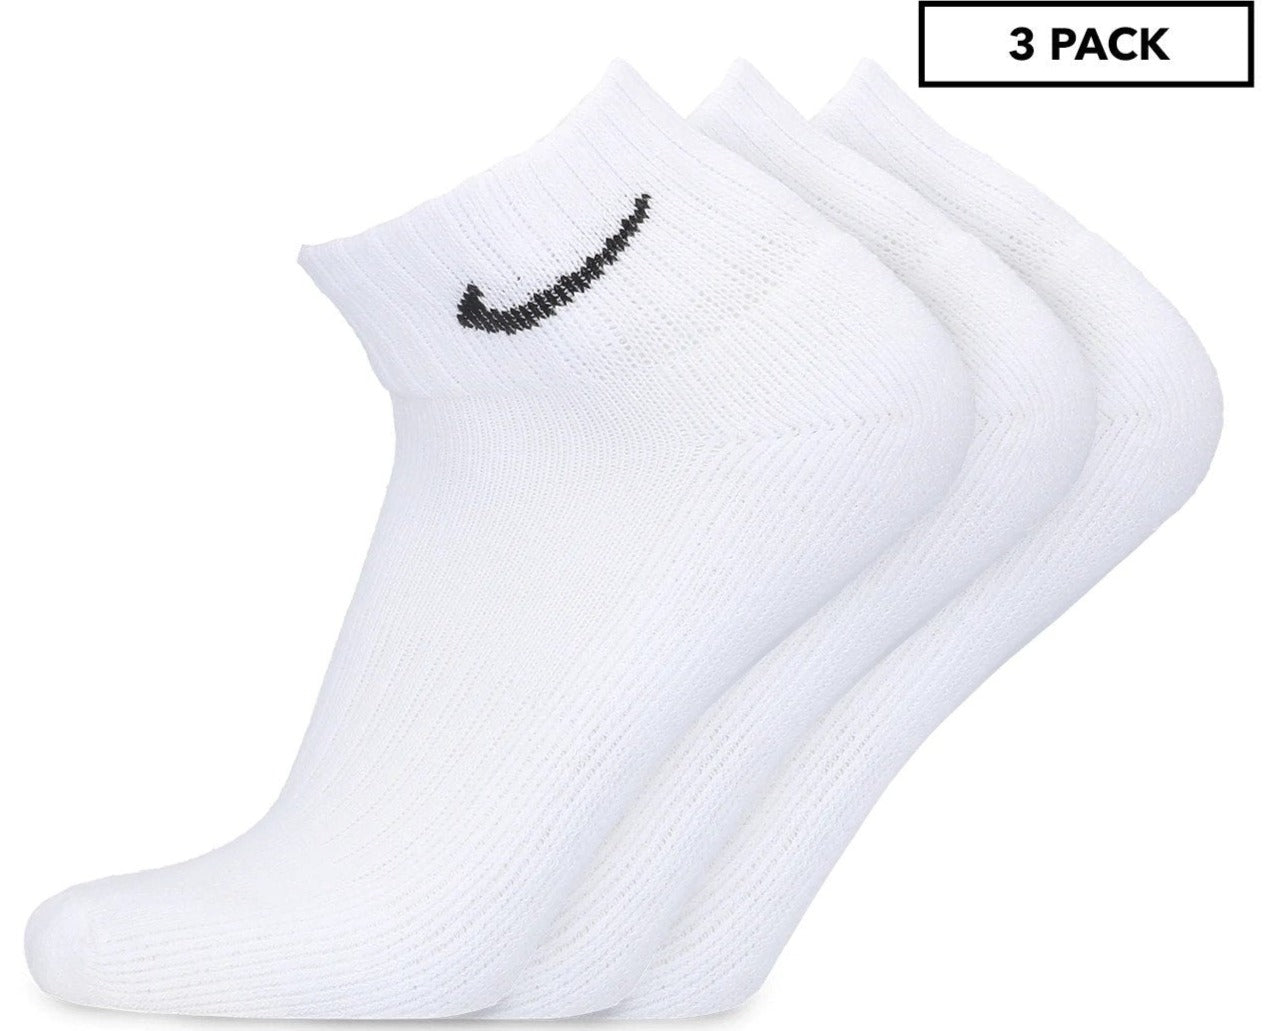 Nike Unisex Cushioned Ankle Socks 3-Pack - White